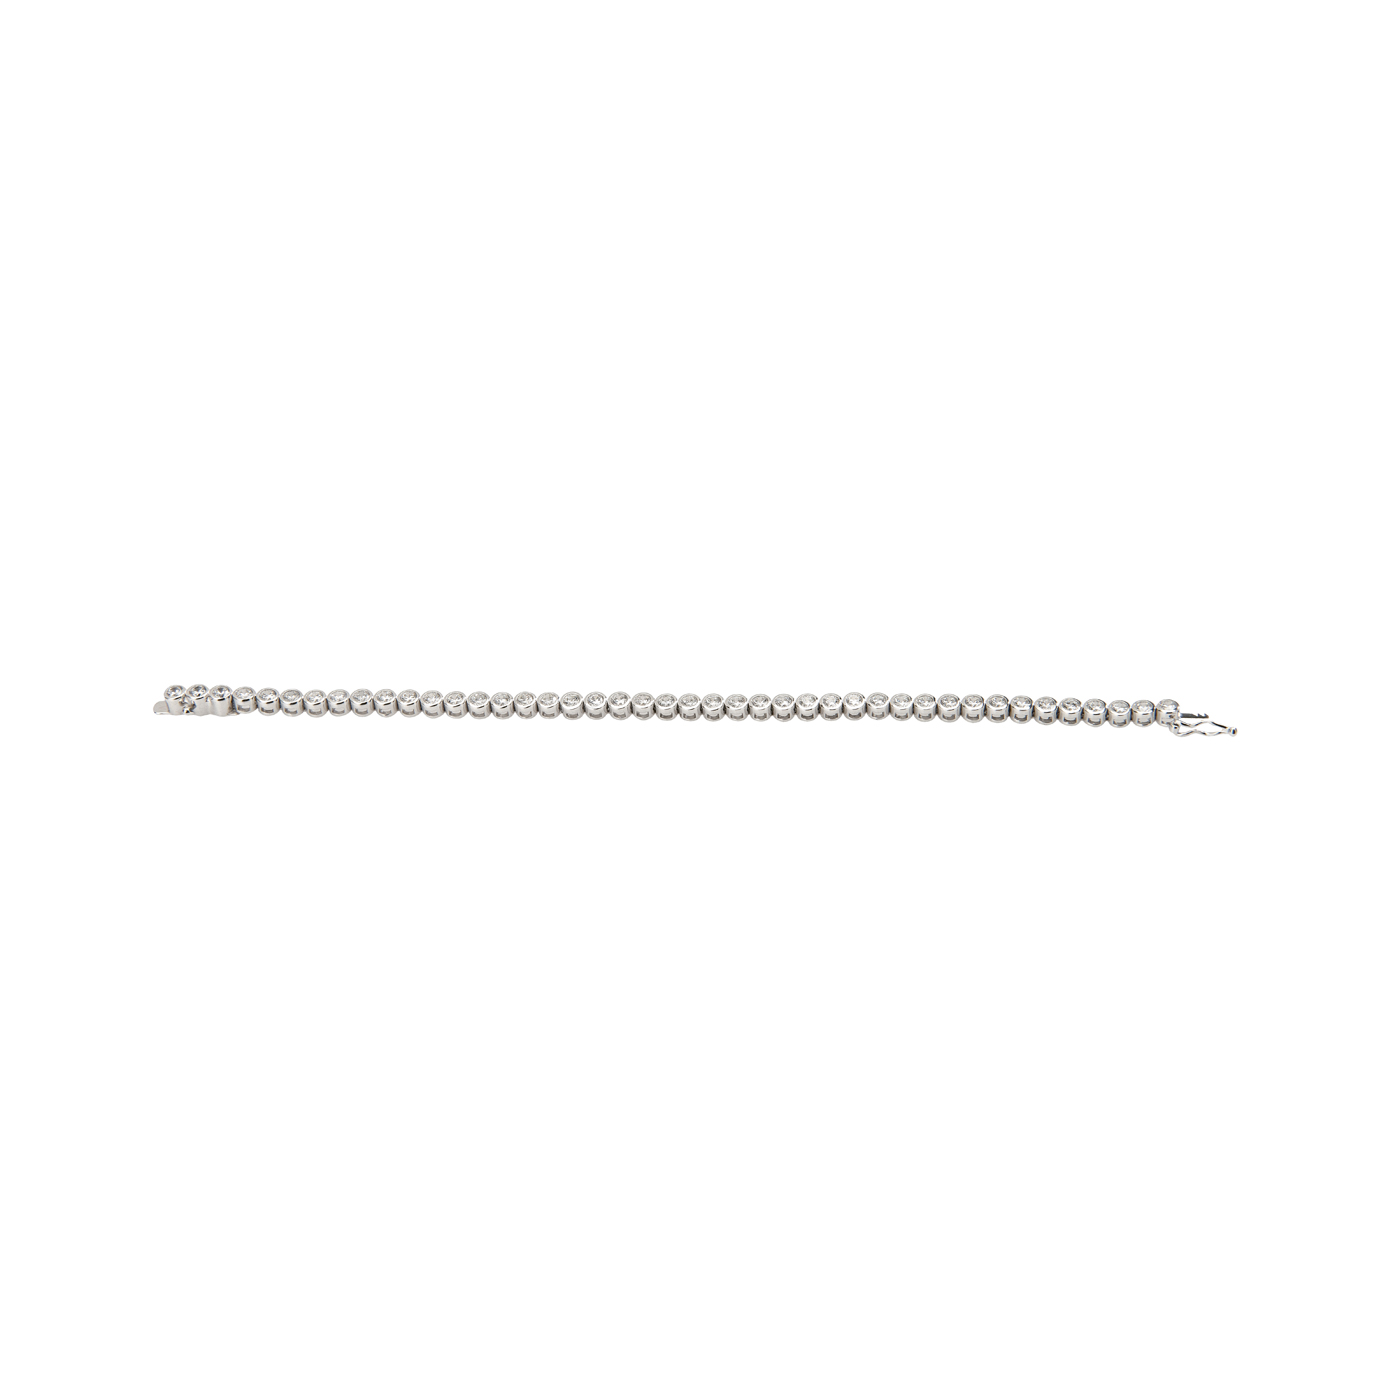 Armband, 925 Ag rhodiniert, Länge 19 cm, Zirkonia weiß - 1 Stück